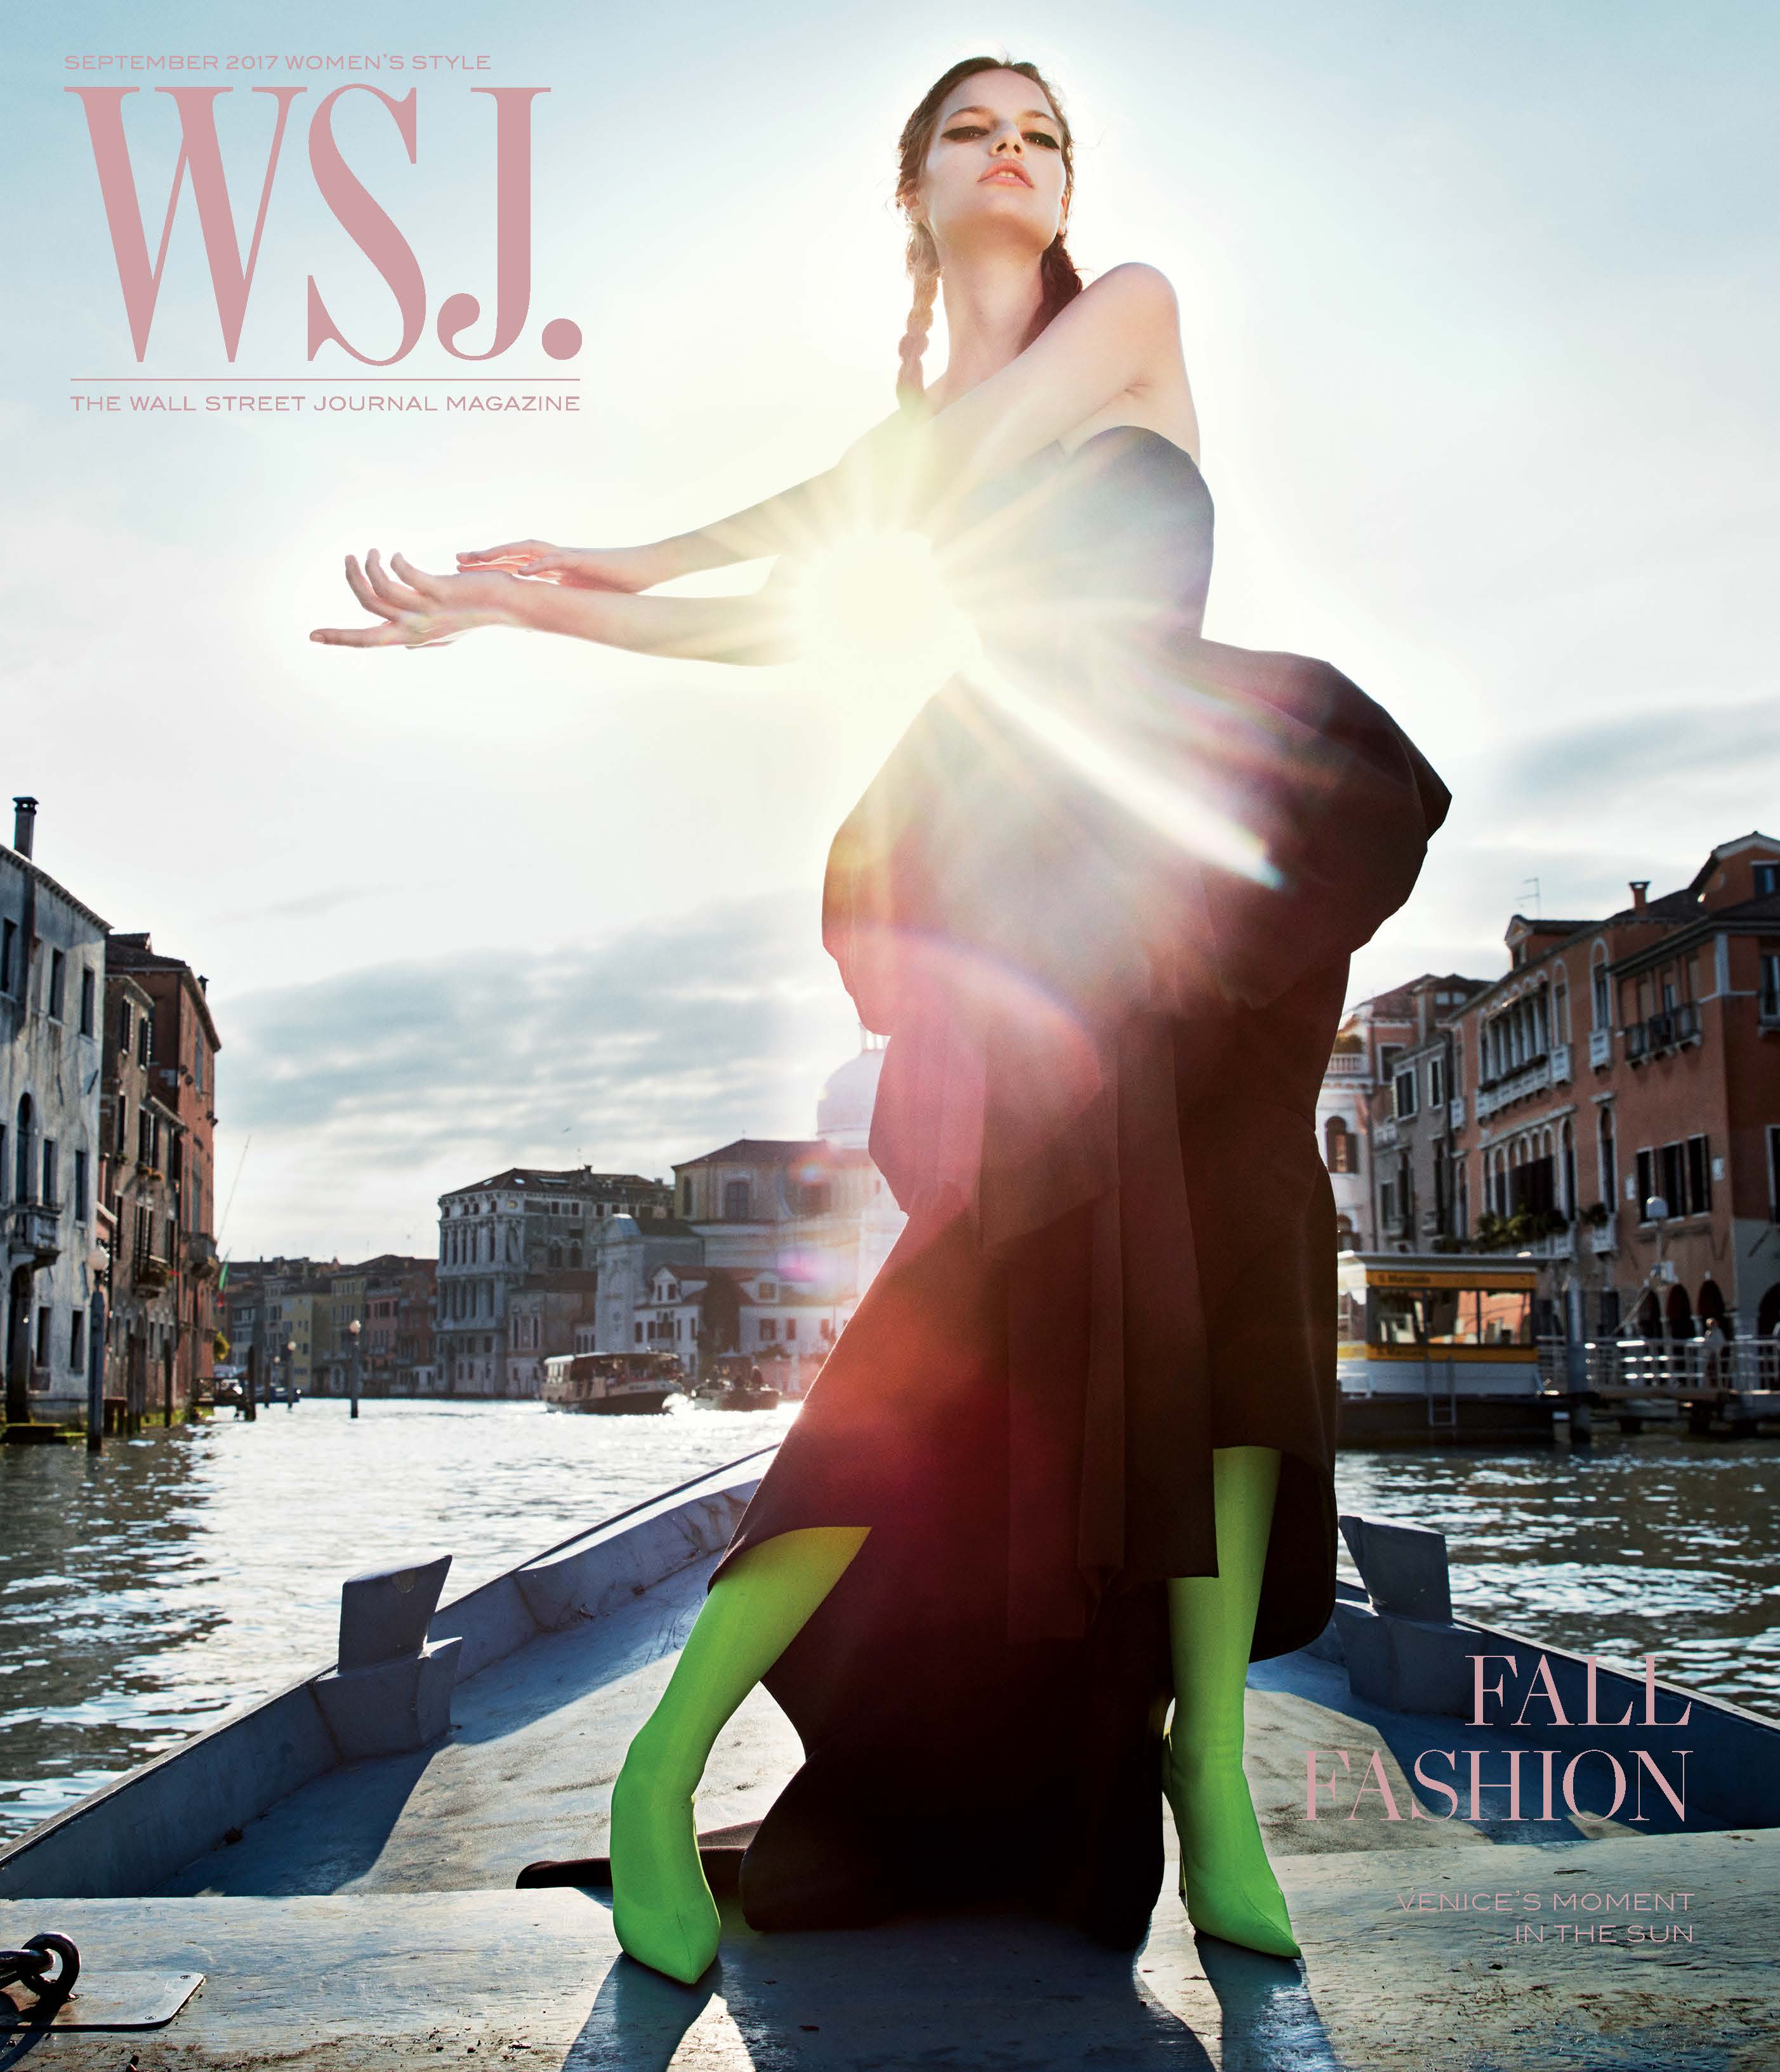 WSJ. Magazine - “Fall Fashion,” September 2017